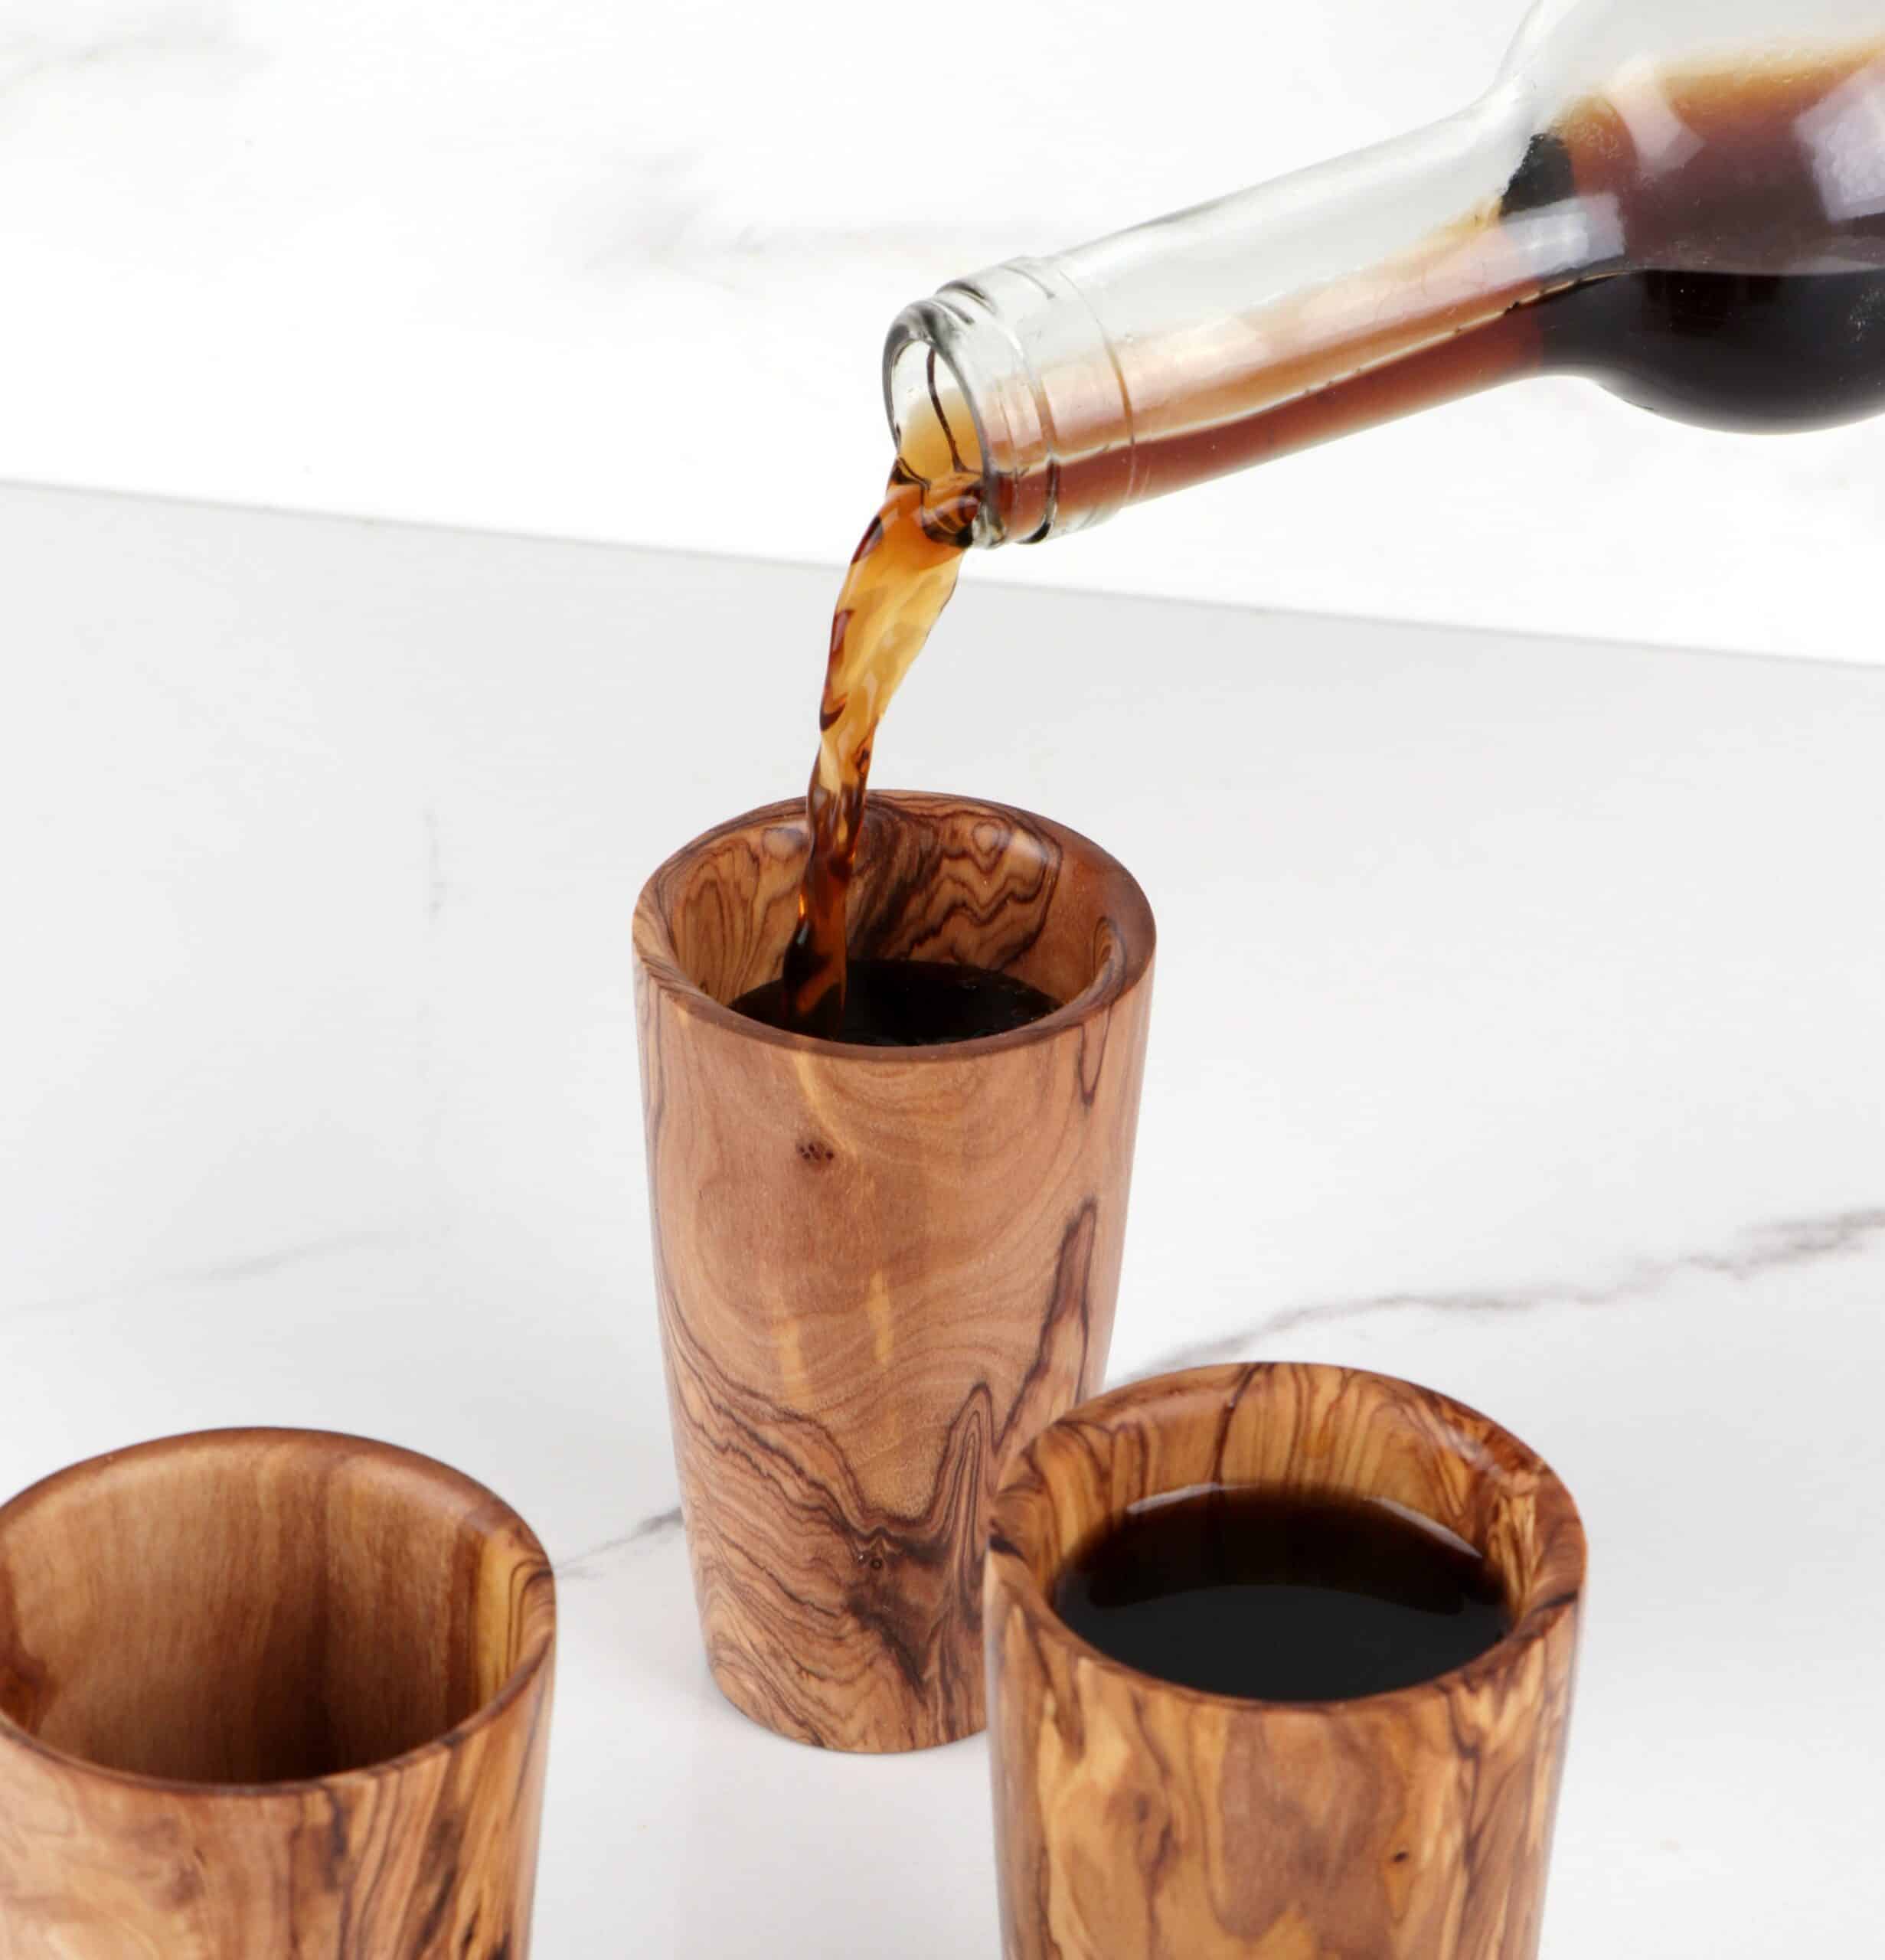 Set of 5 Wooden Drinking Cups Handmade - Artisraw